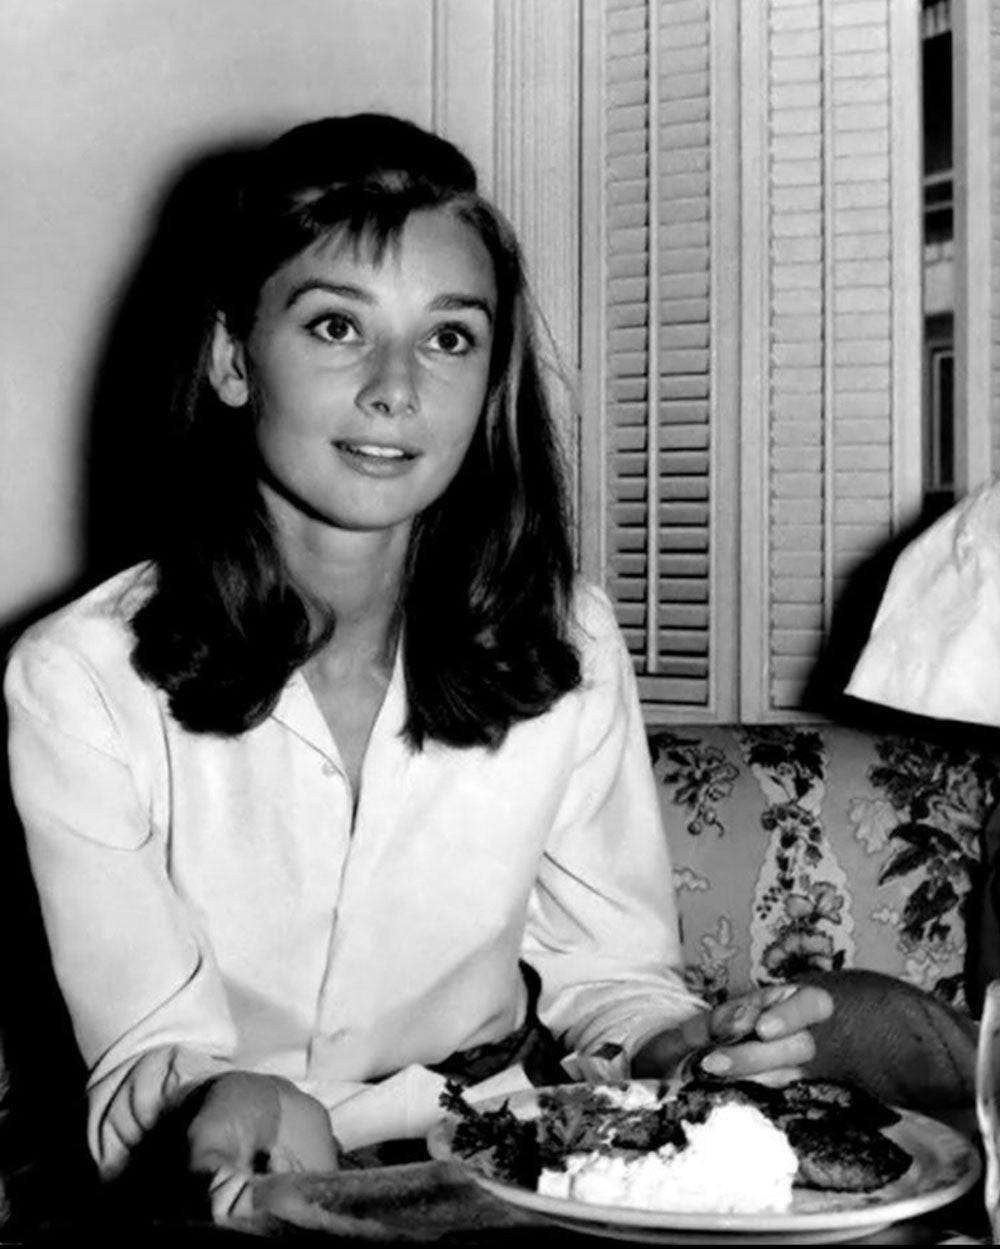 Audrey Hepburn, icon of style